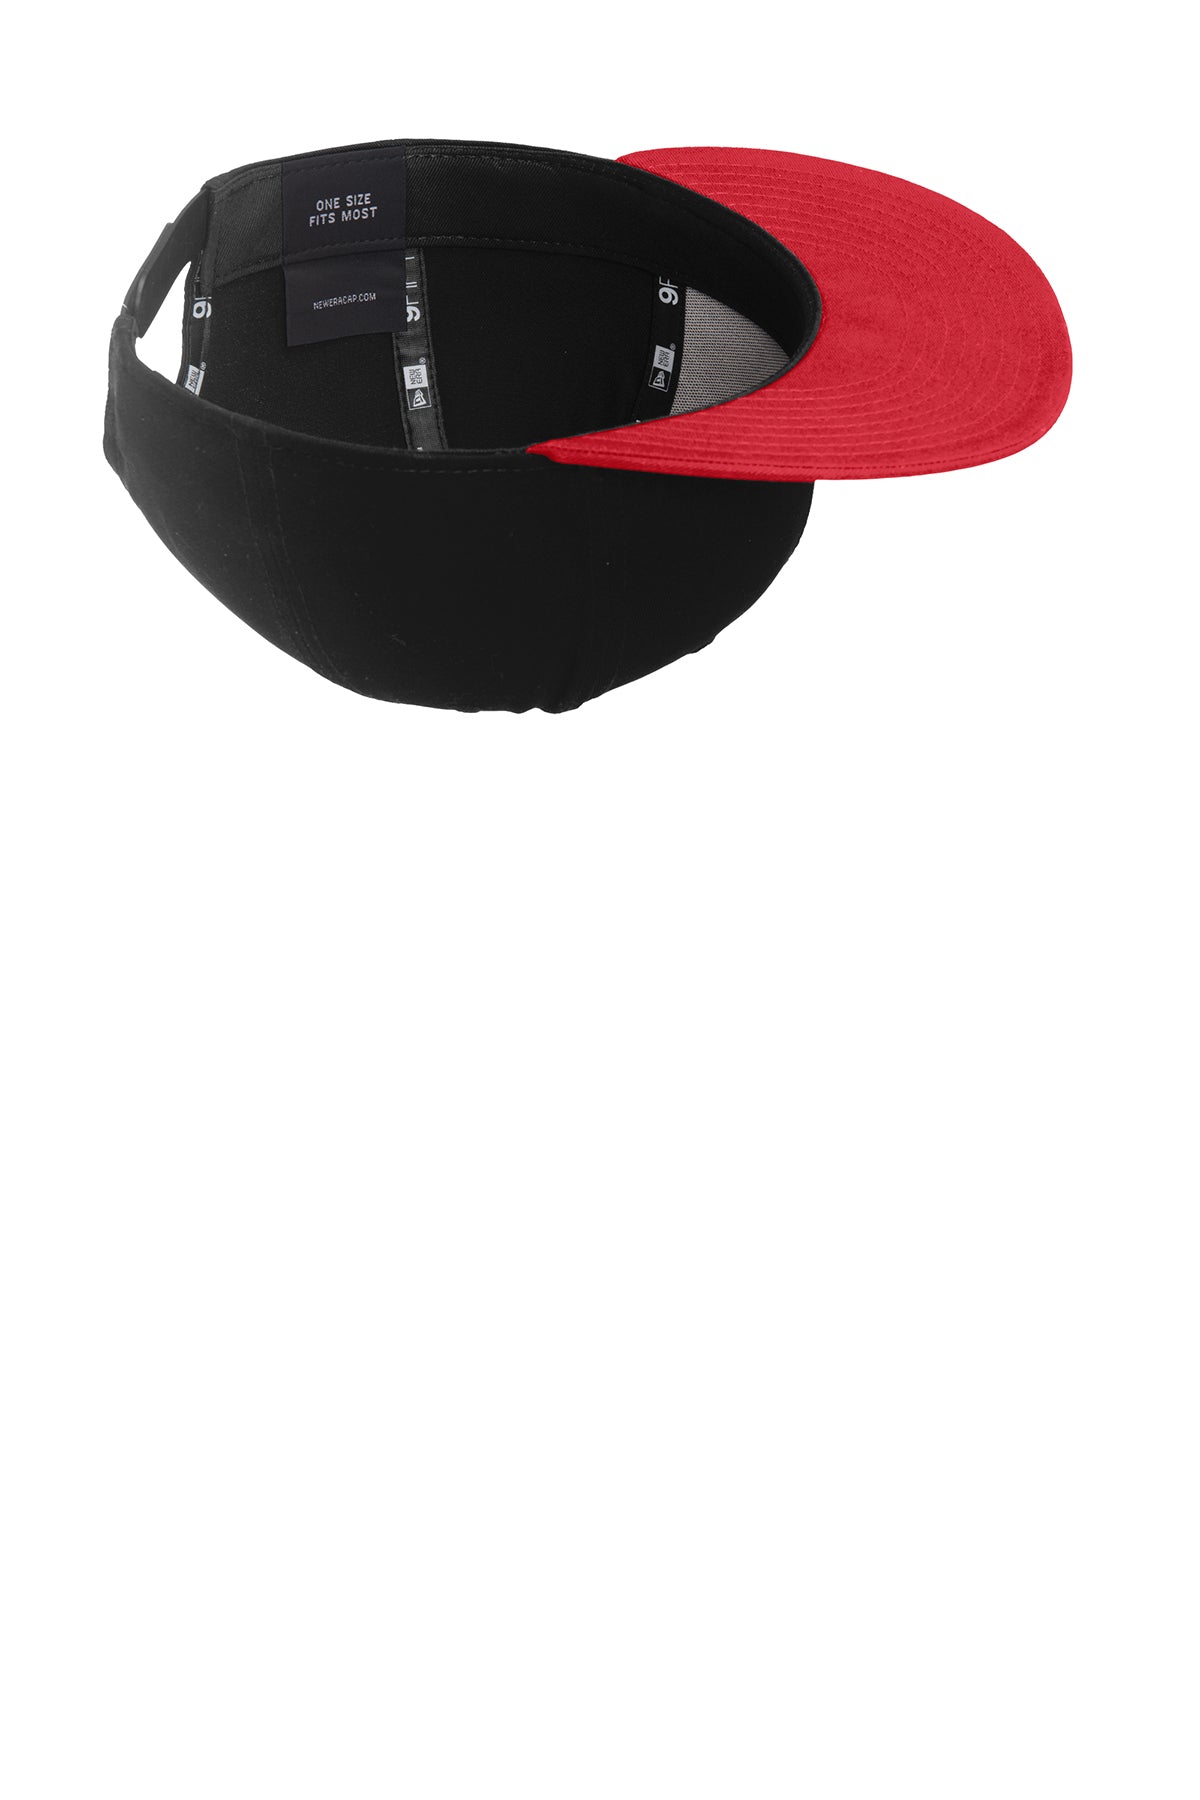 New Era Flat Bill Snapback Customized Caps, Black/ Scarlet